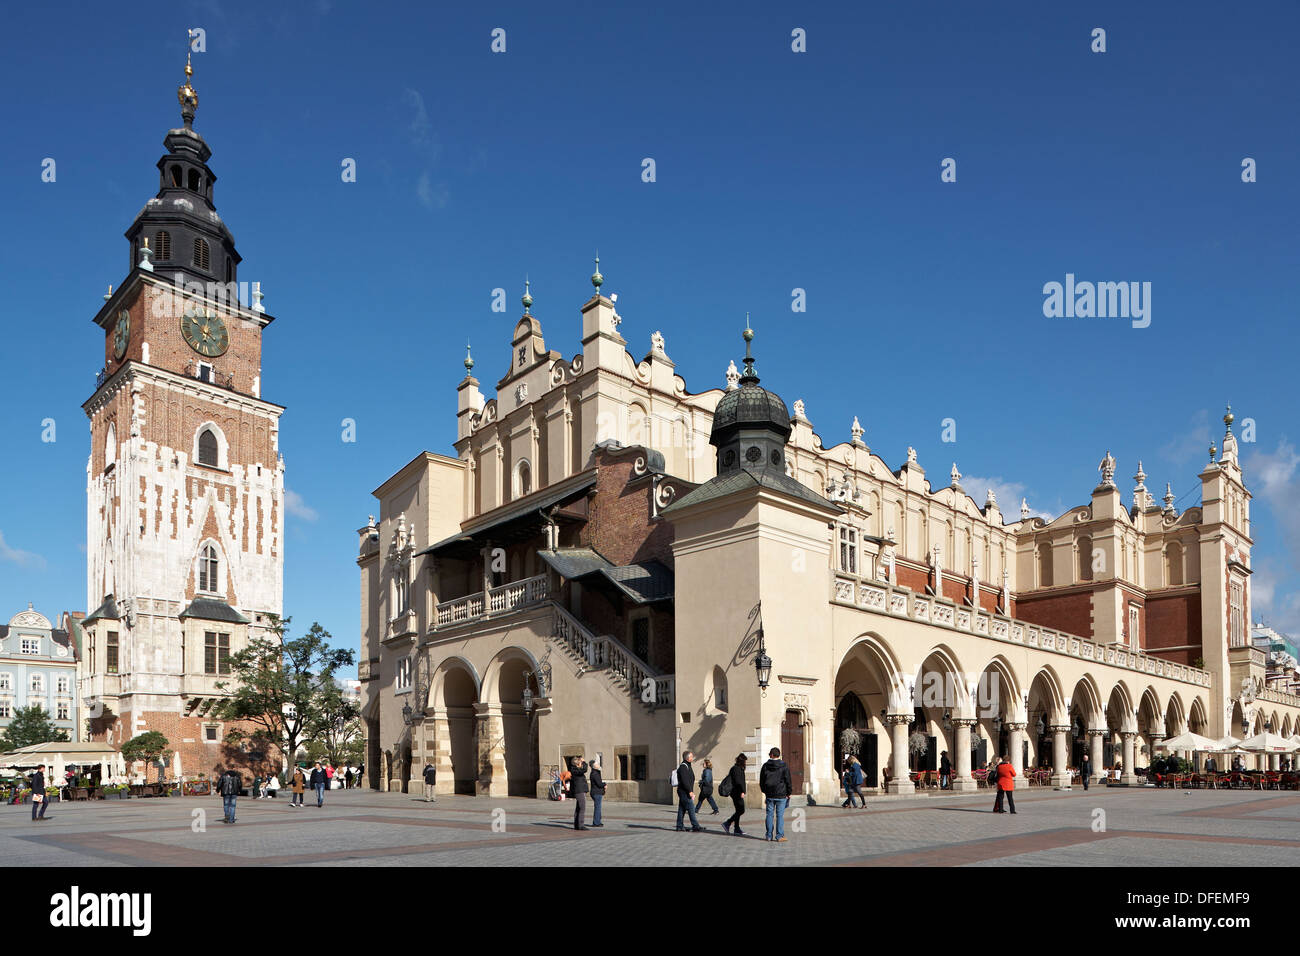 Eastern Europe Poland Malopolska Region Rynek Glowny Main Square Town Hall and Sukiennice Cloth Hall Stock Photo